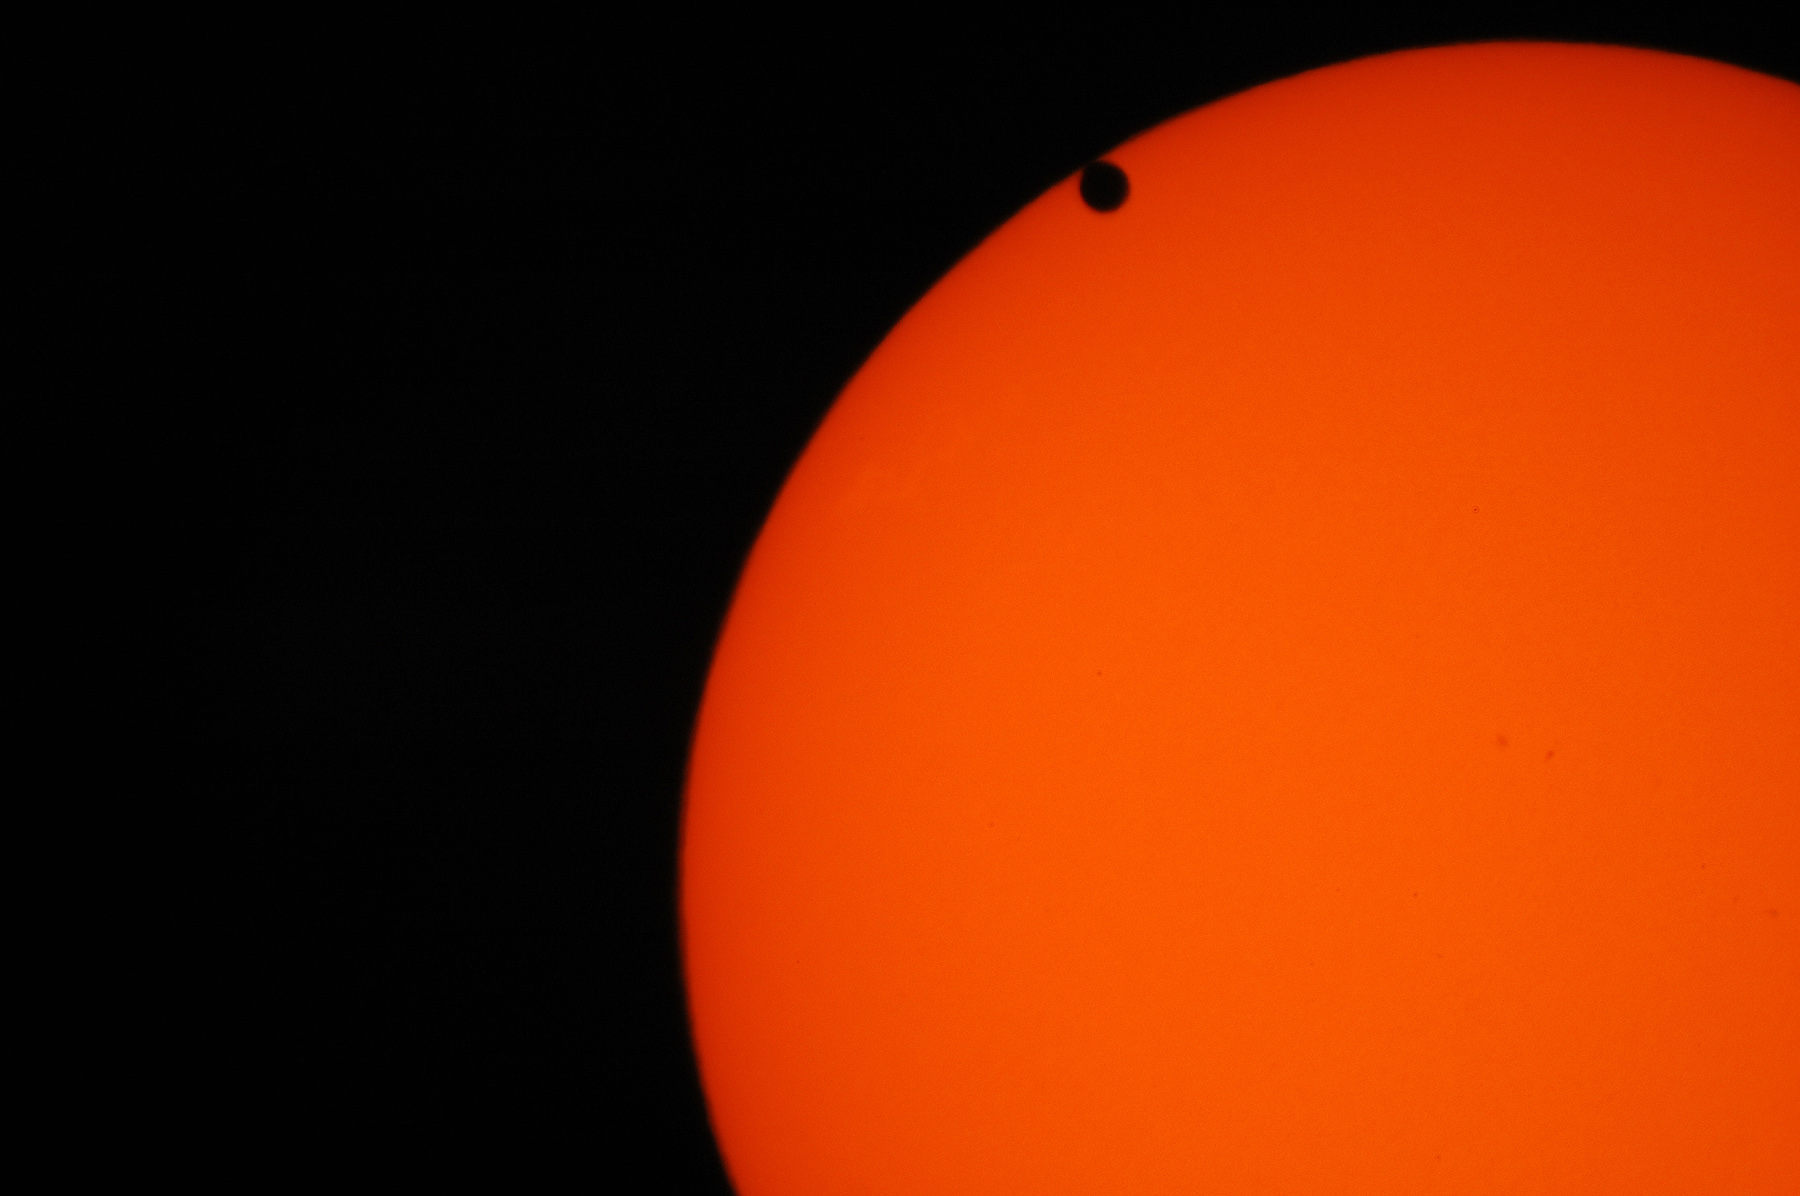 Eclipse 2004 - Venus - DSC_0120